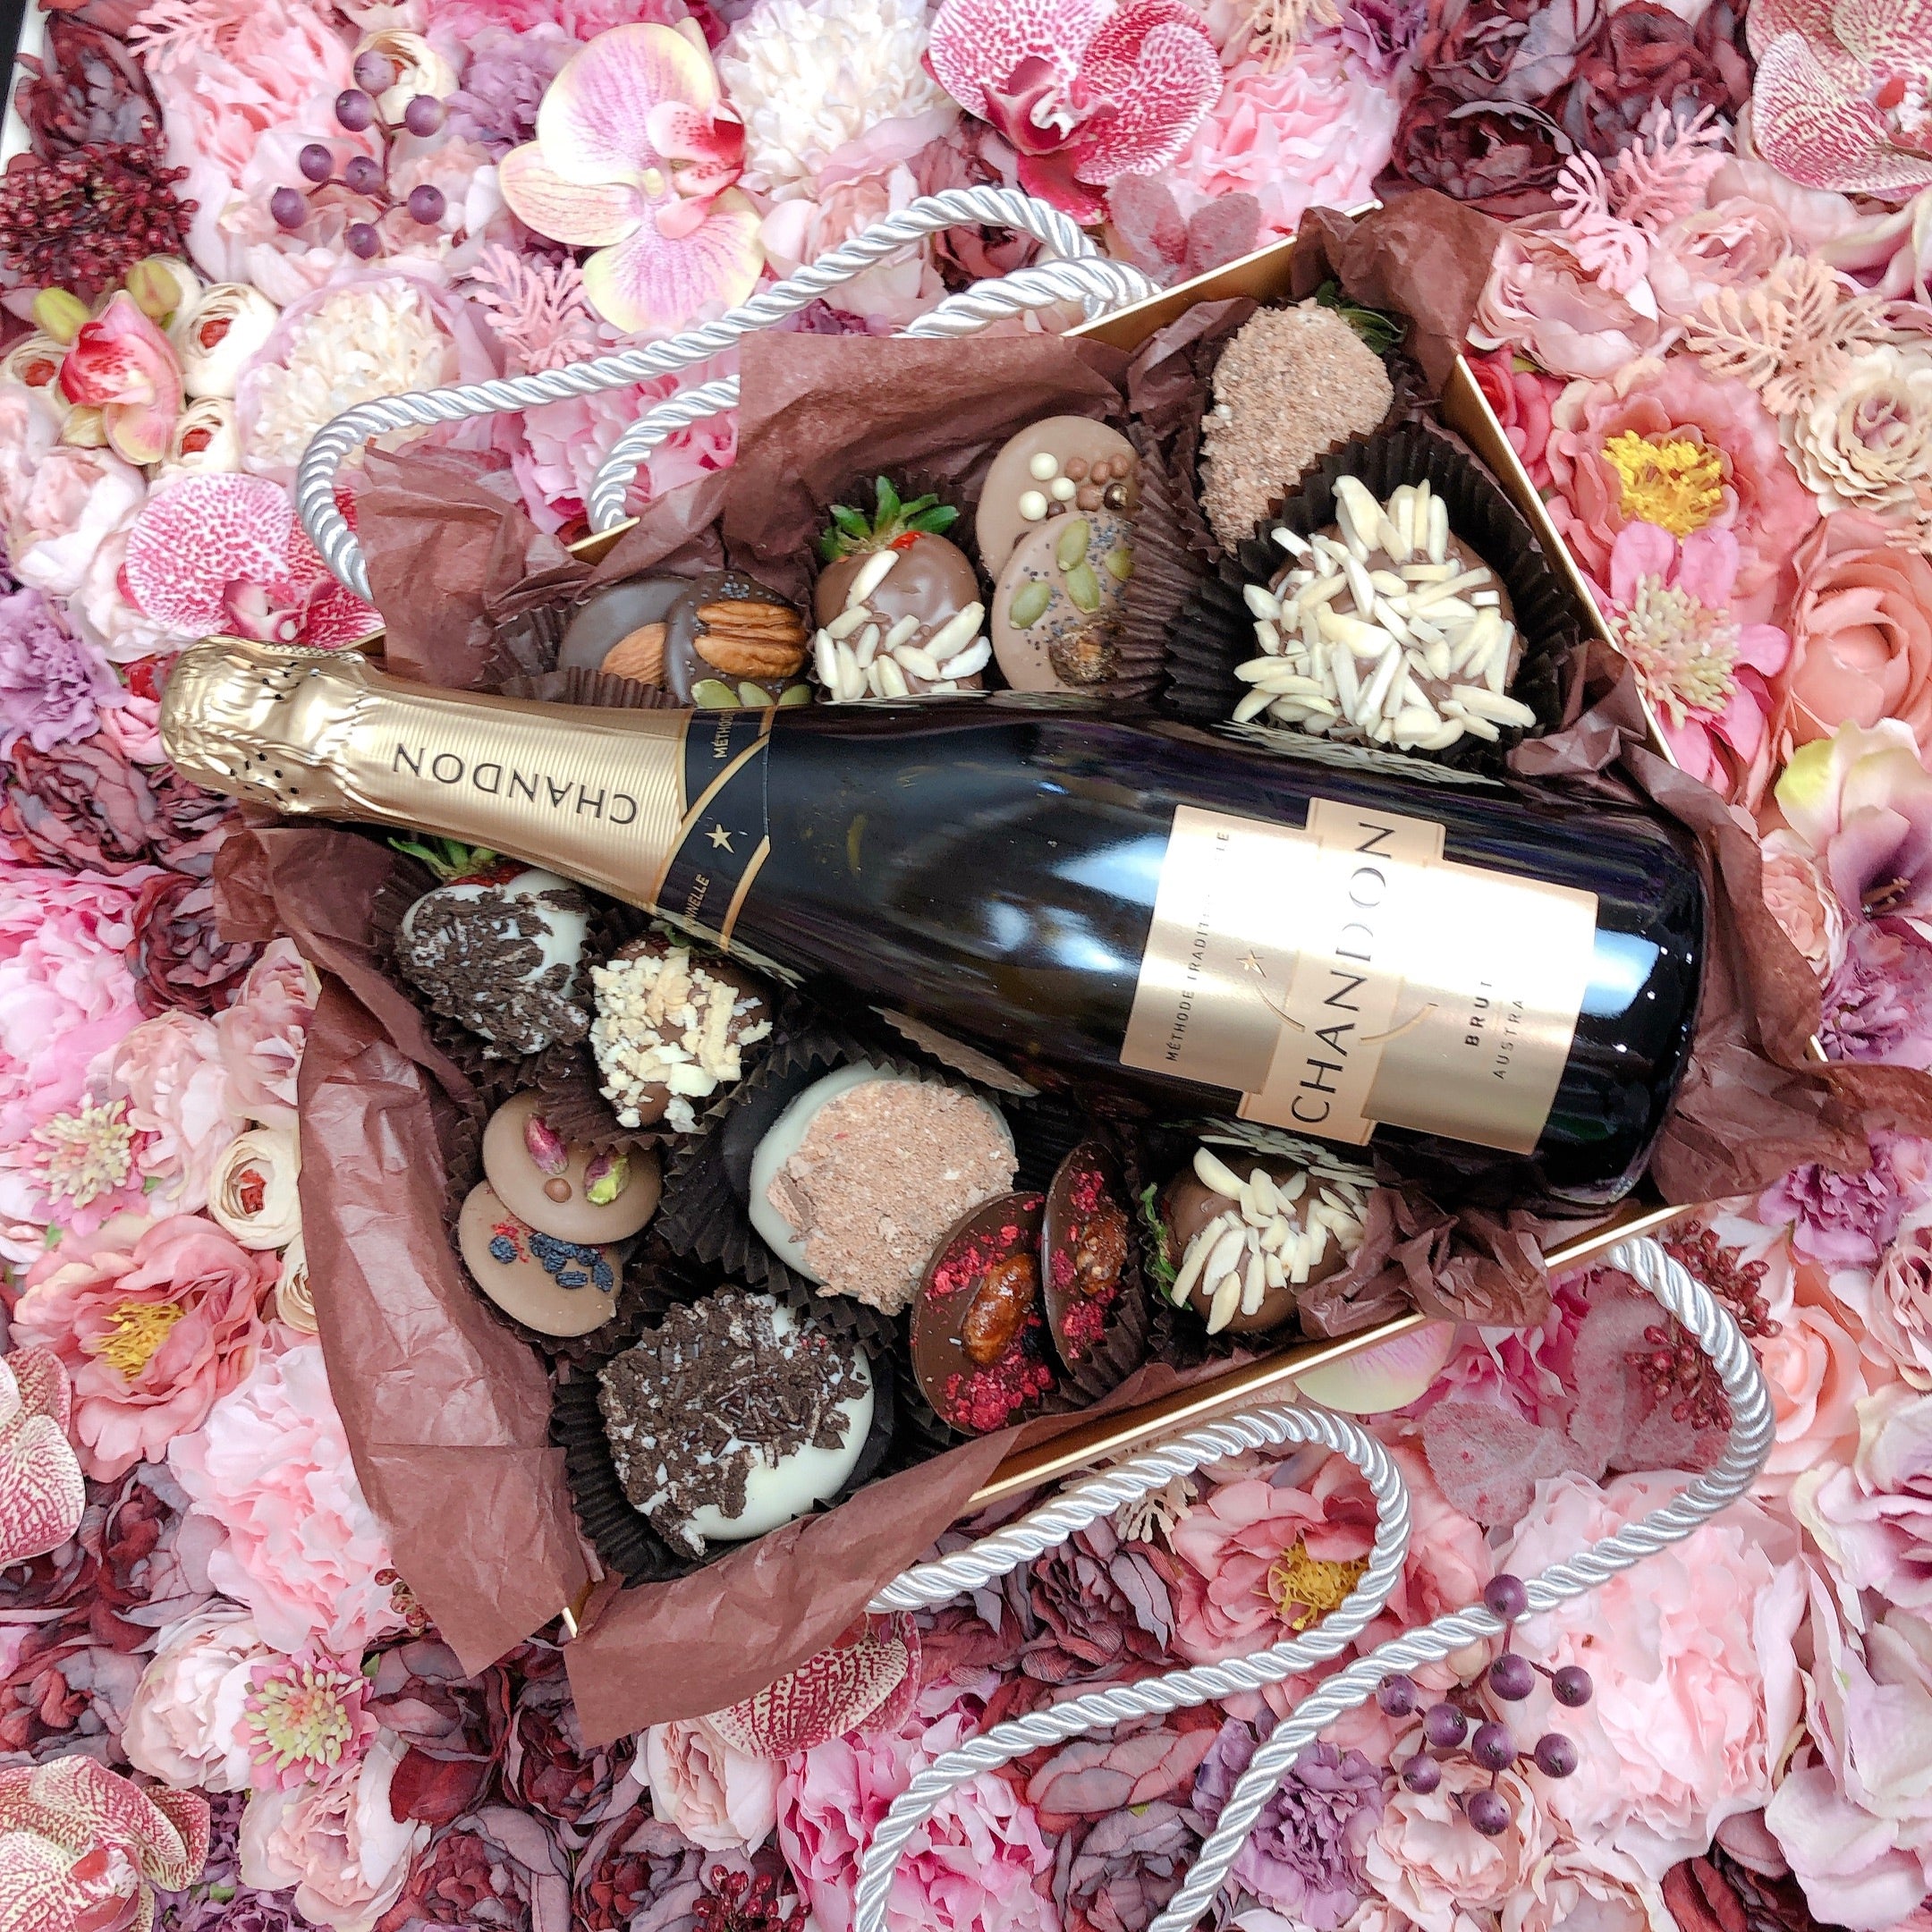 Chocolate covered strawberries and champagne hamper, luxury wedding anniversary champagne hamper